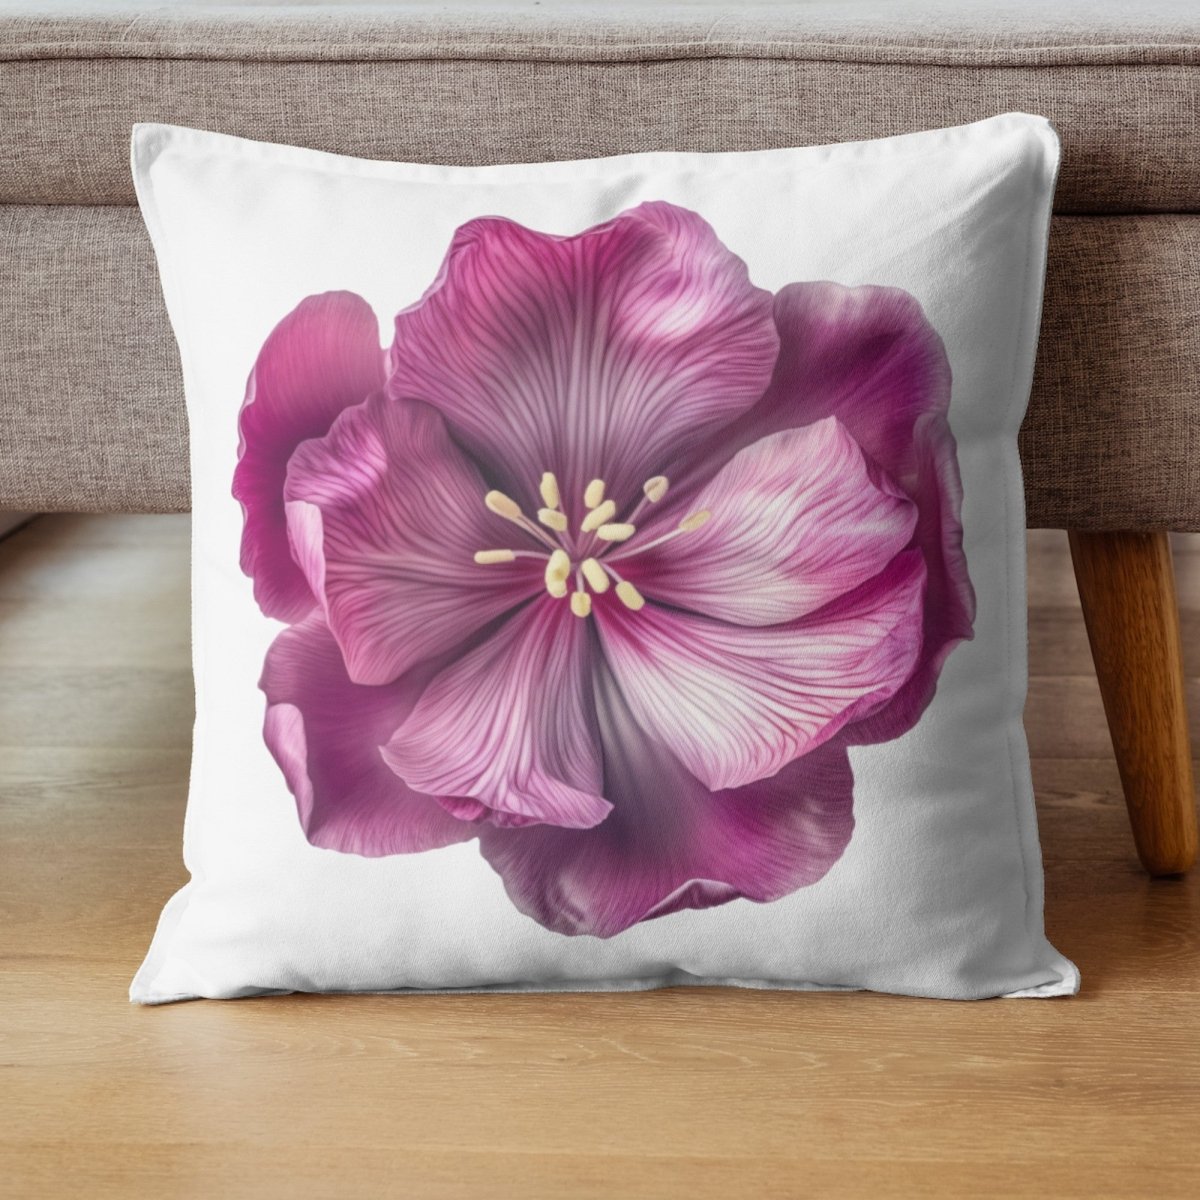 Purple Tulip Blossom 6+6 PNG Clipart Bundle, Transparent Background, Photorealistic - Everything Pixel